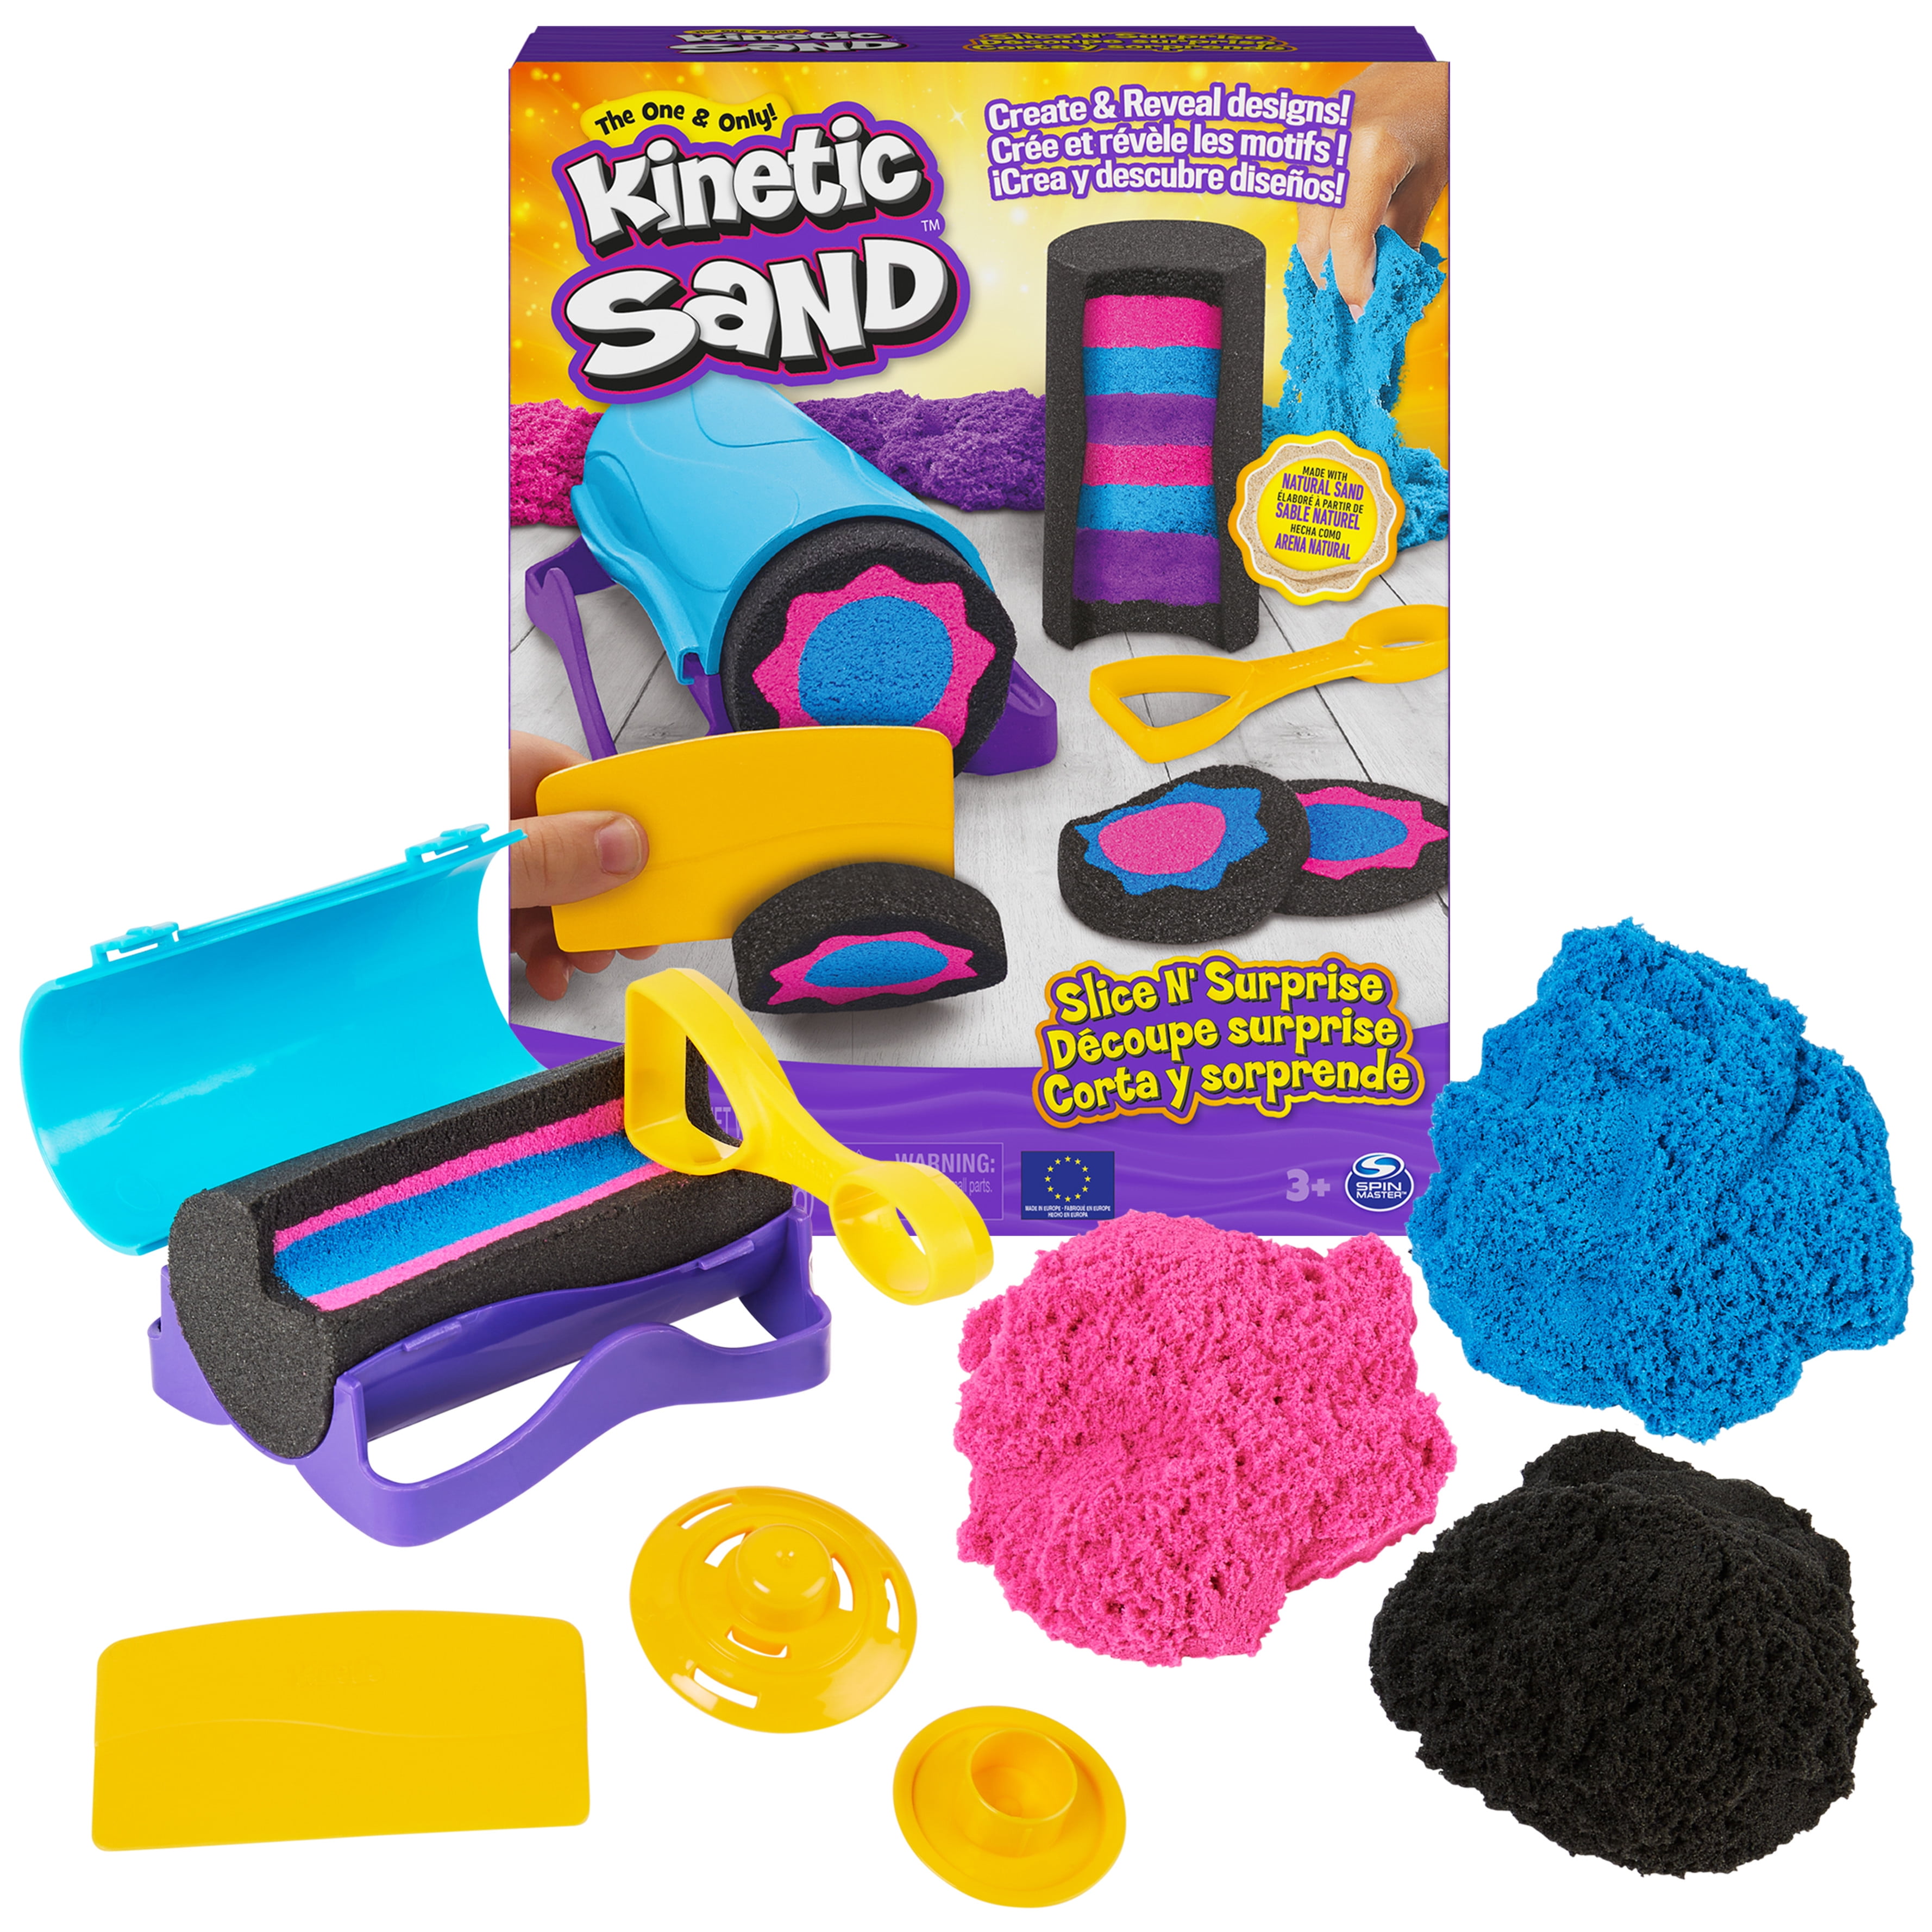 Kinetic Sand Kinetic Sand - 5 oz